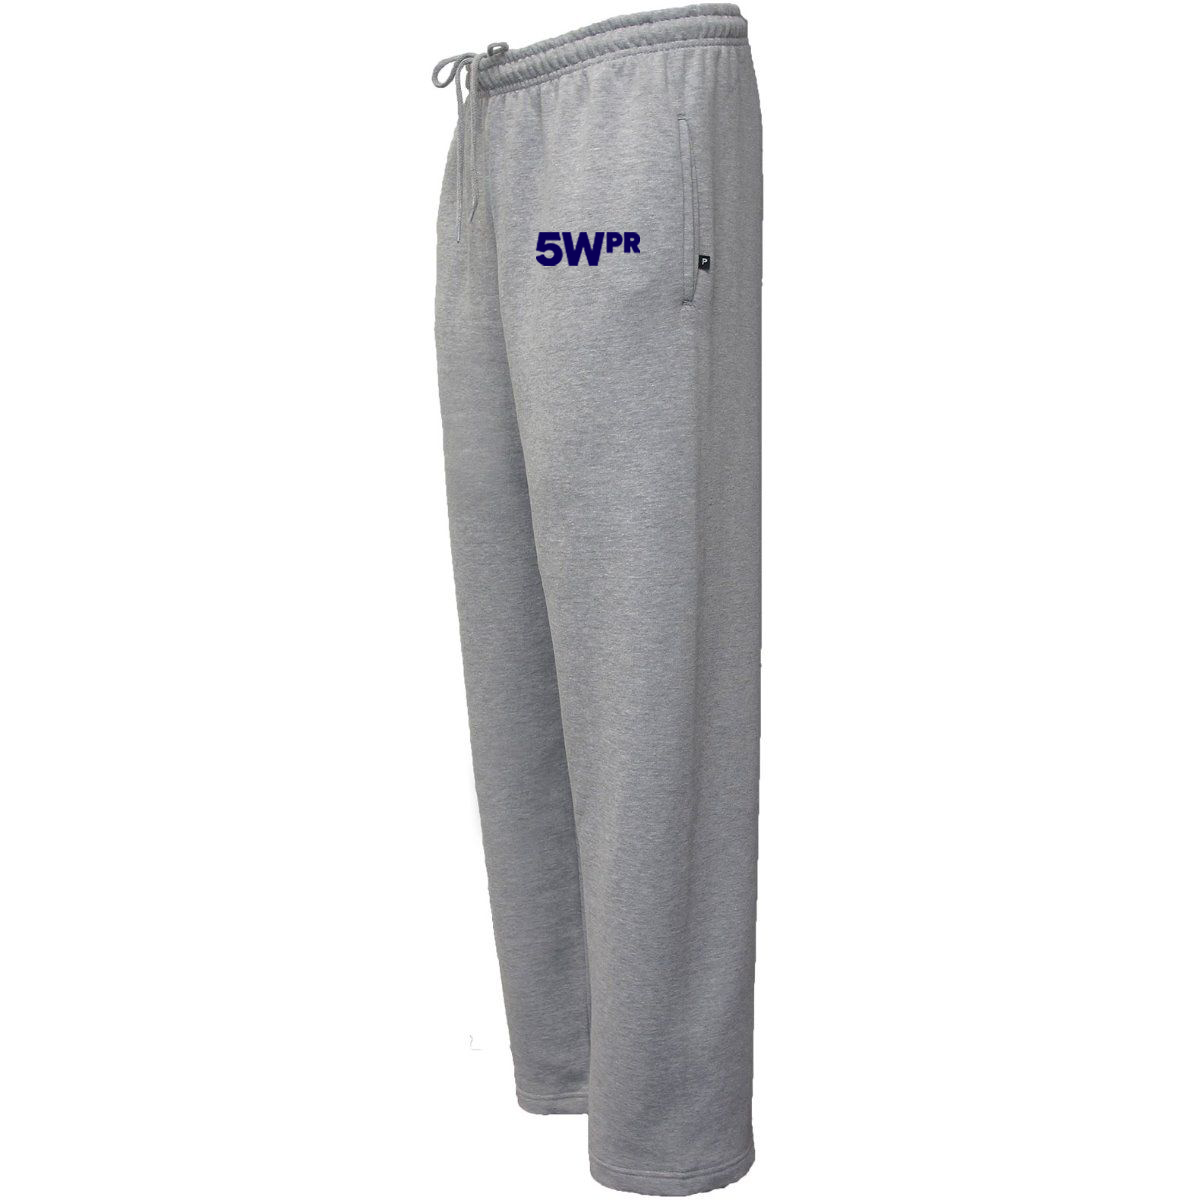 5WPR Sweatpants